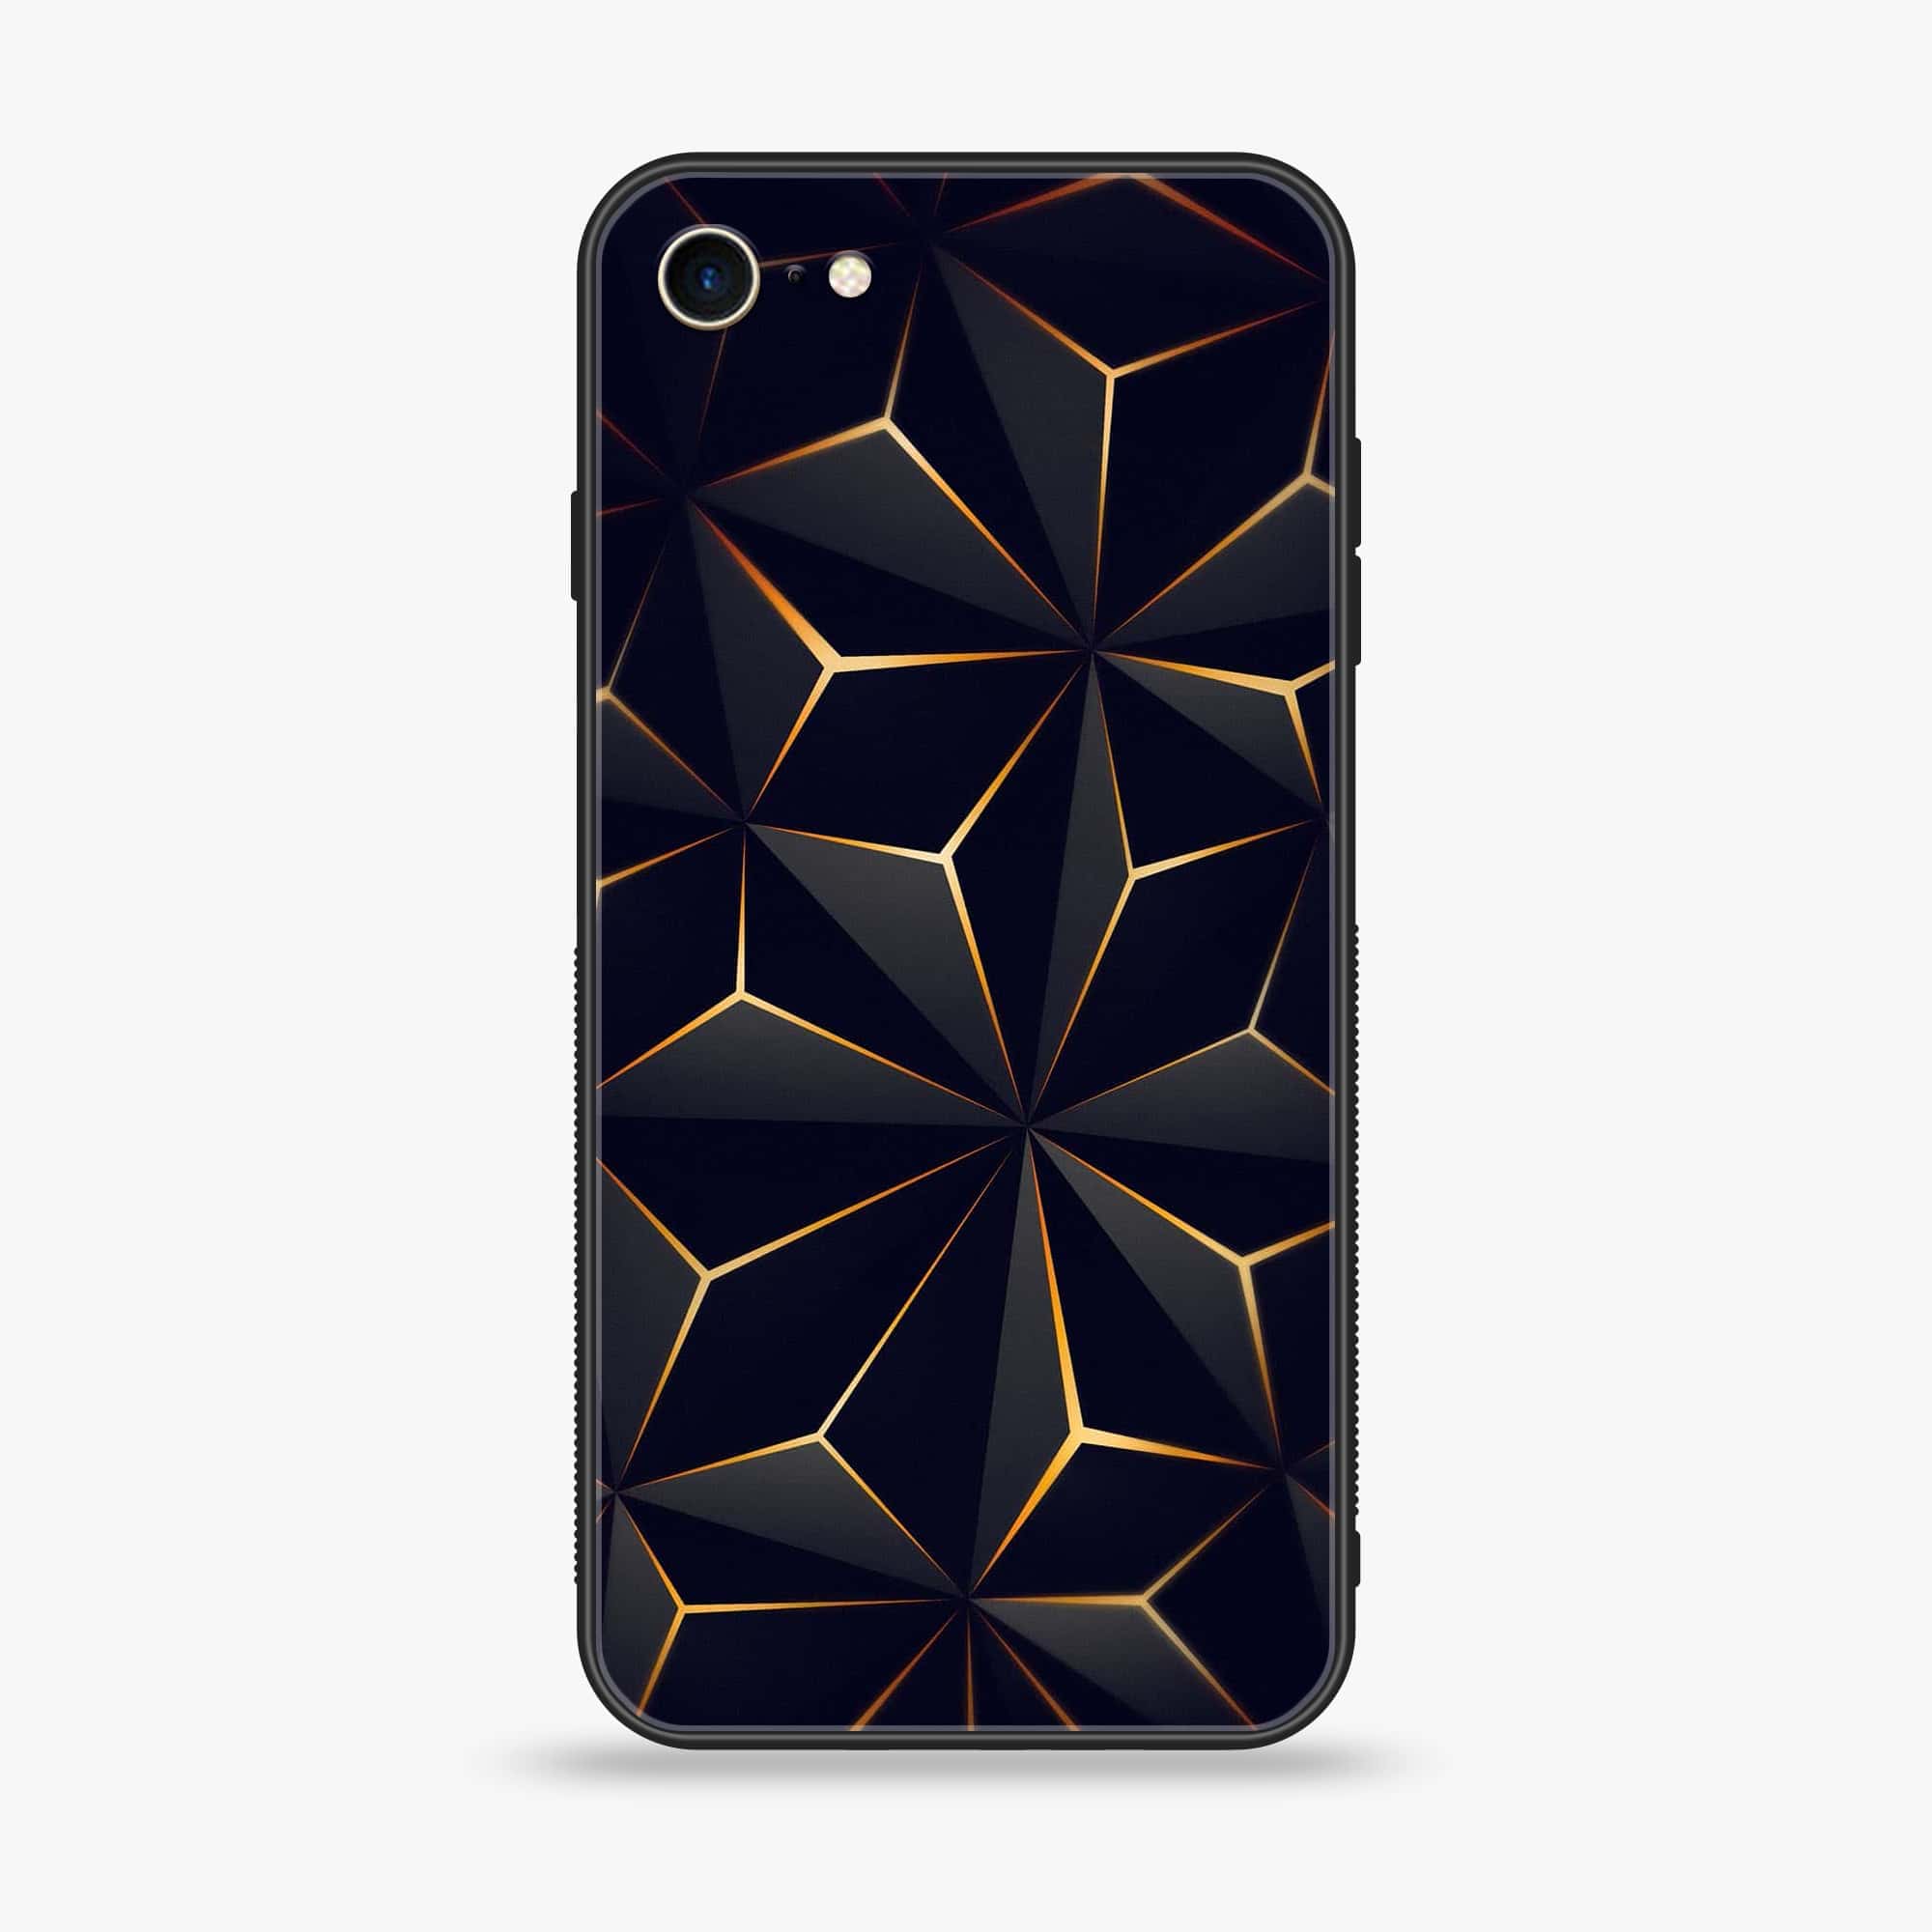 iPhone 6Plus  - 3D Designs Series - Premium Printed Glass soft Bumper shock Proof Case